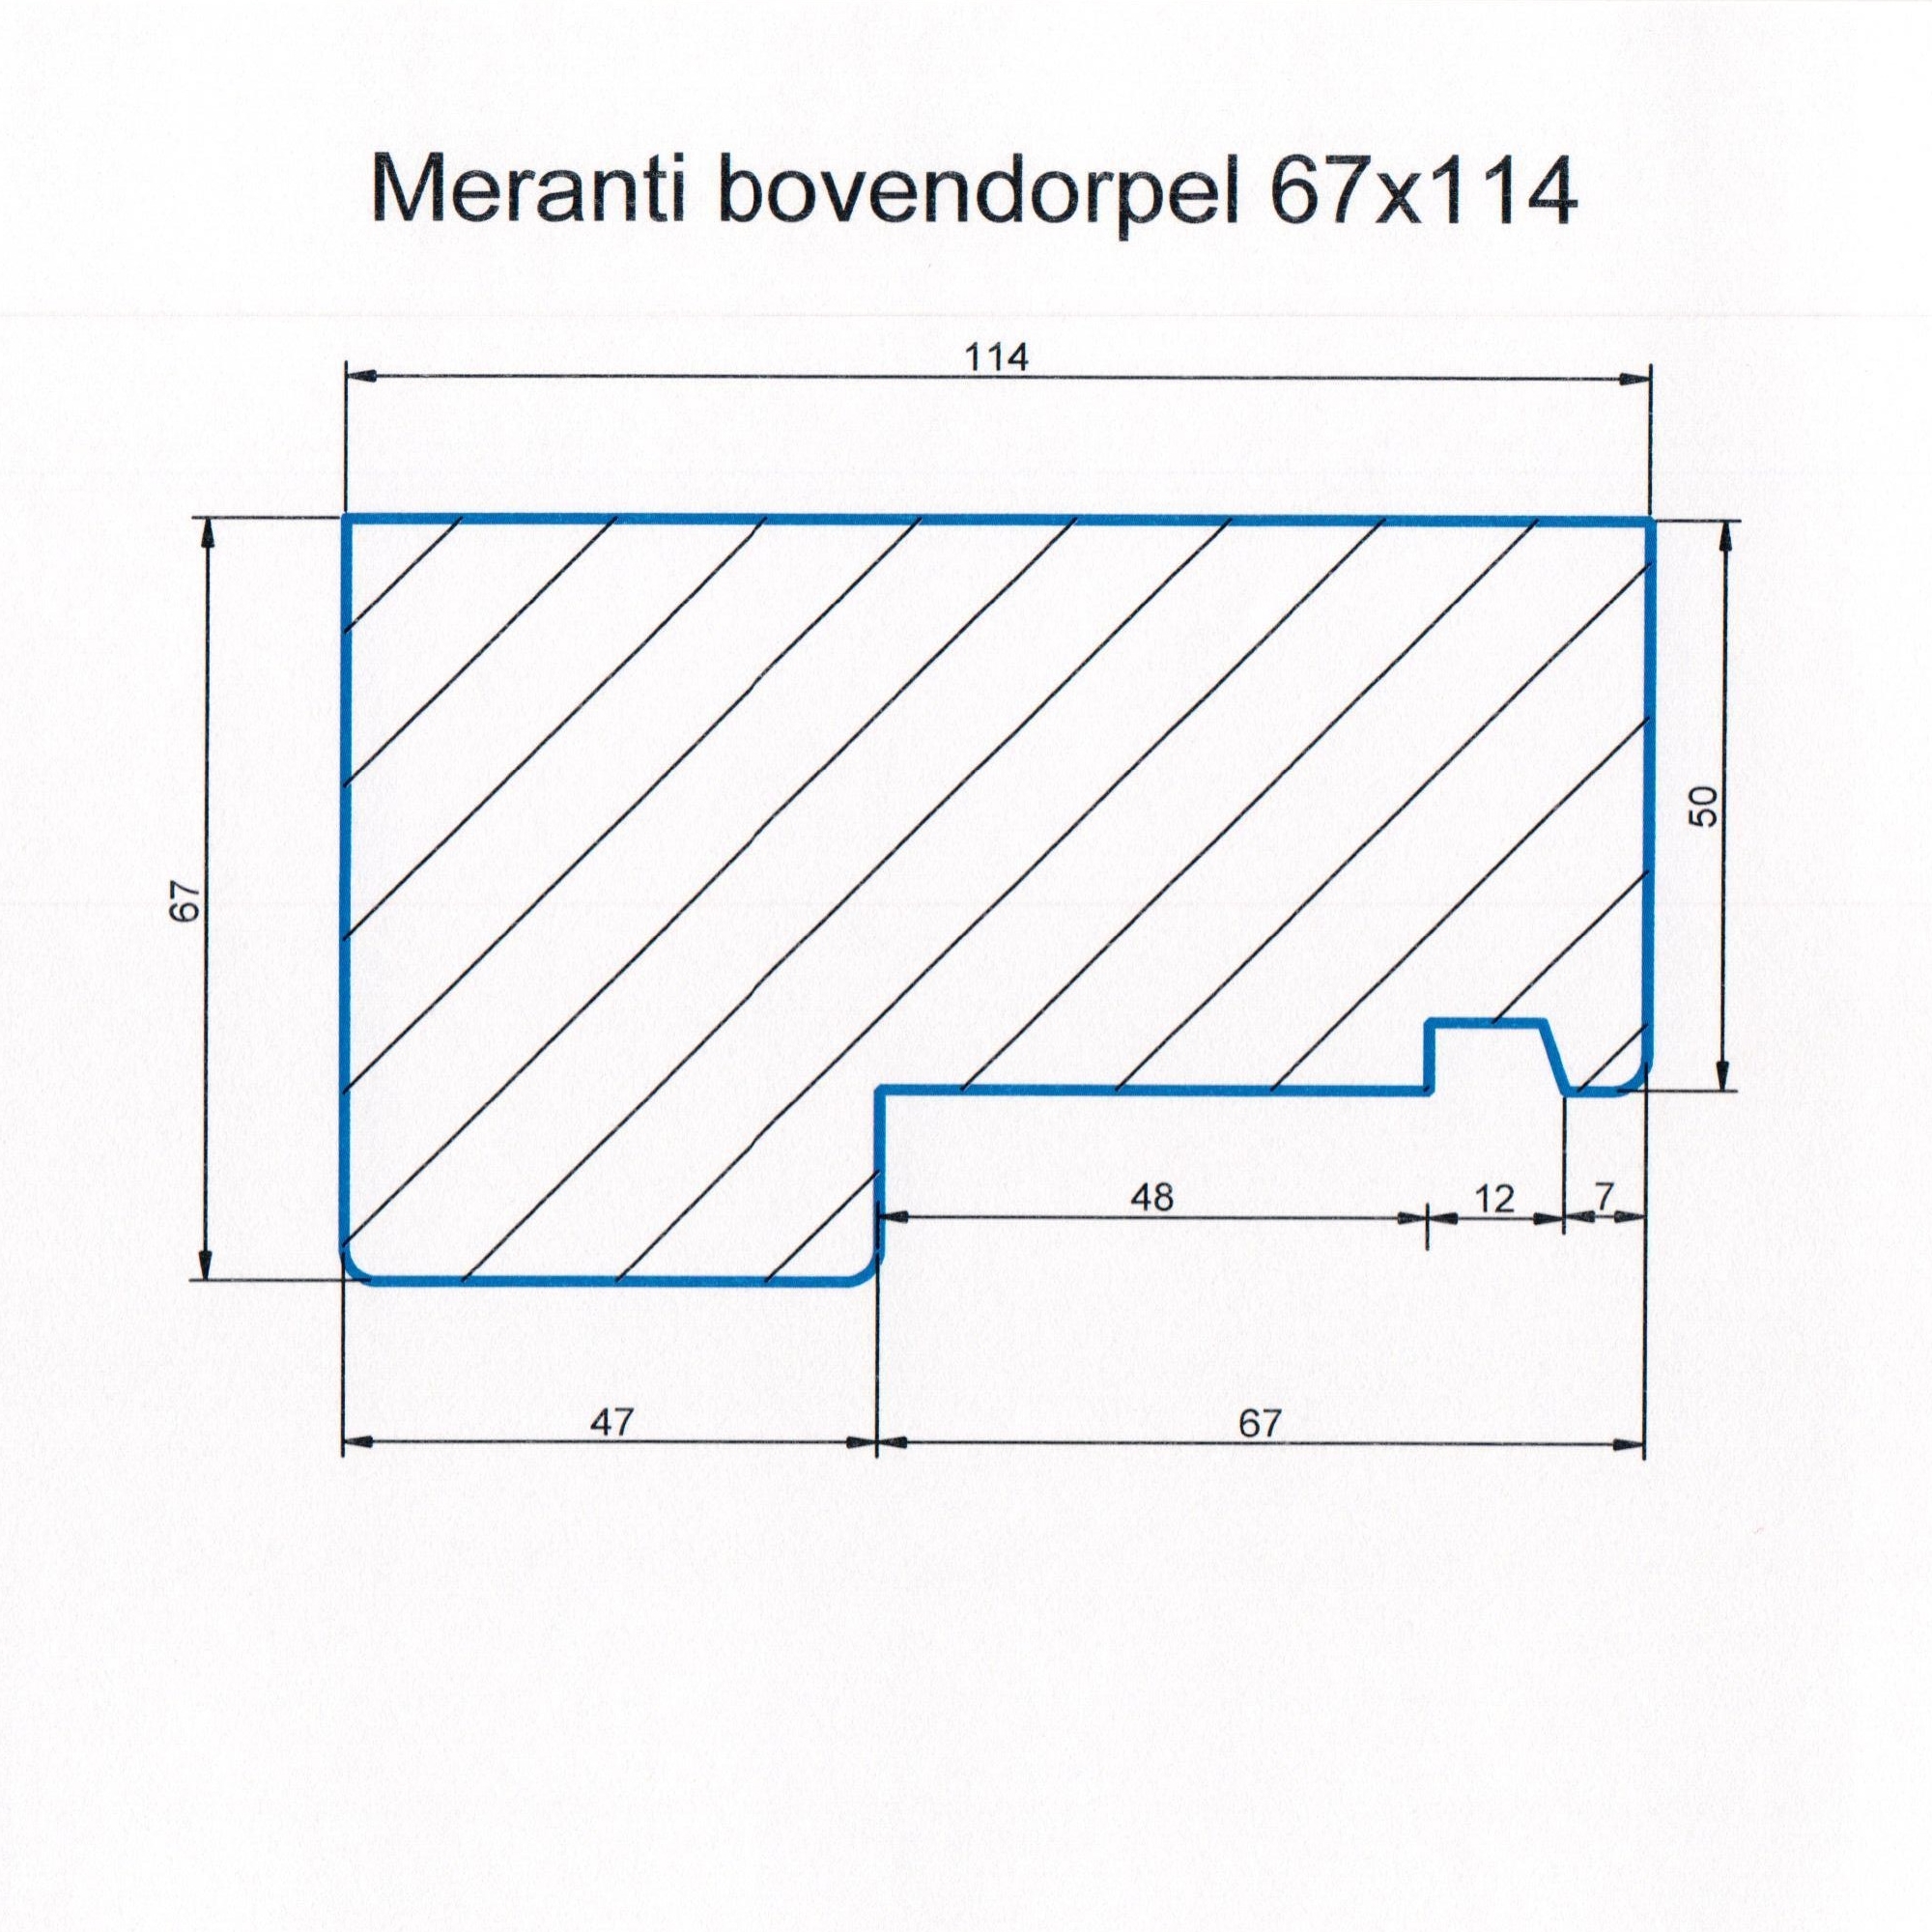 Meranti 67x114 kozijnhout bovendorpel L=1200 mm